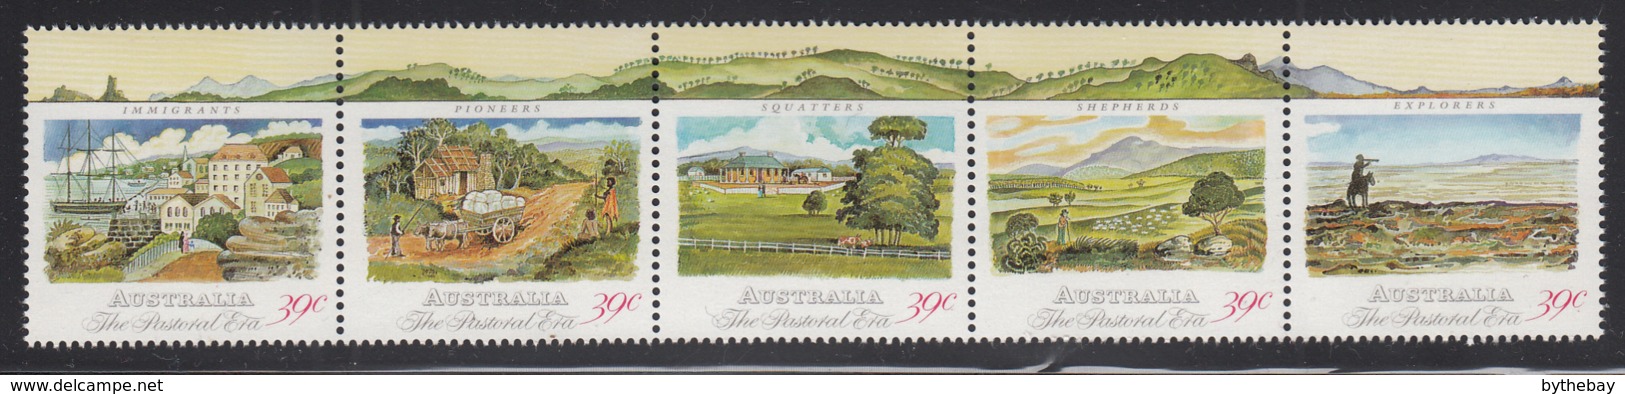 Australia 1989 MNH Scott #1141 39c Pastoral Era Strip Of 5 Ship, Hut, Shepherds Colonial Australia - Mint Stamps